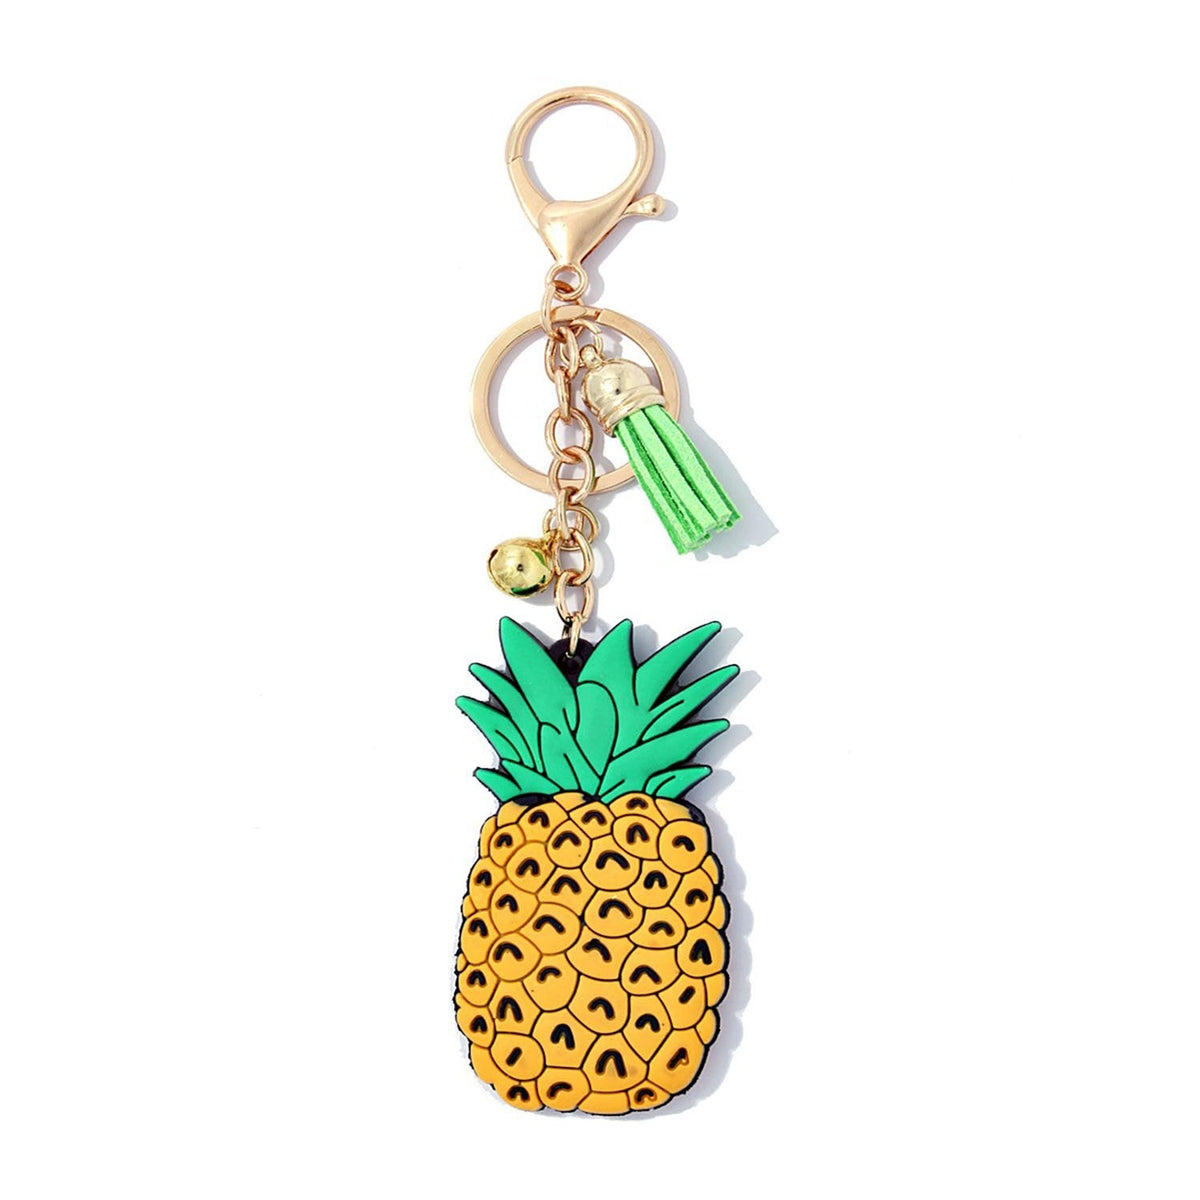 Pineapple Key Chain - Key Chains